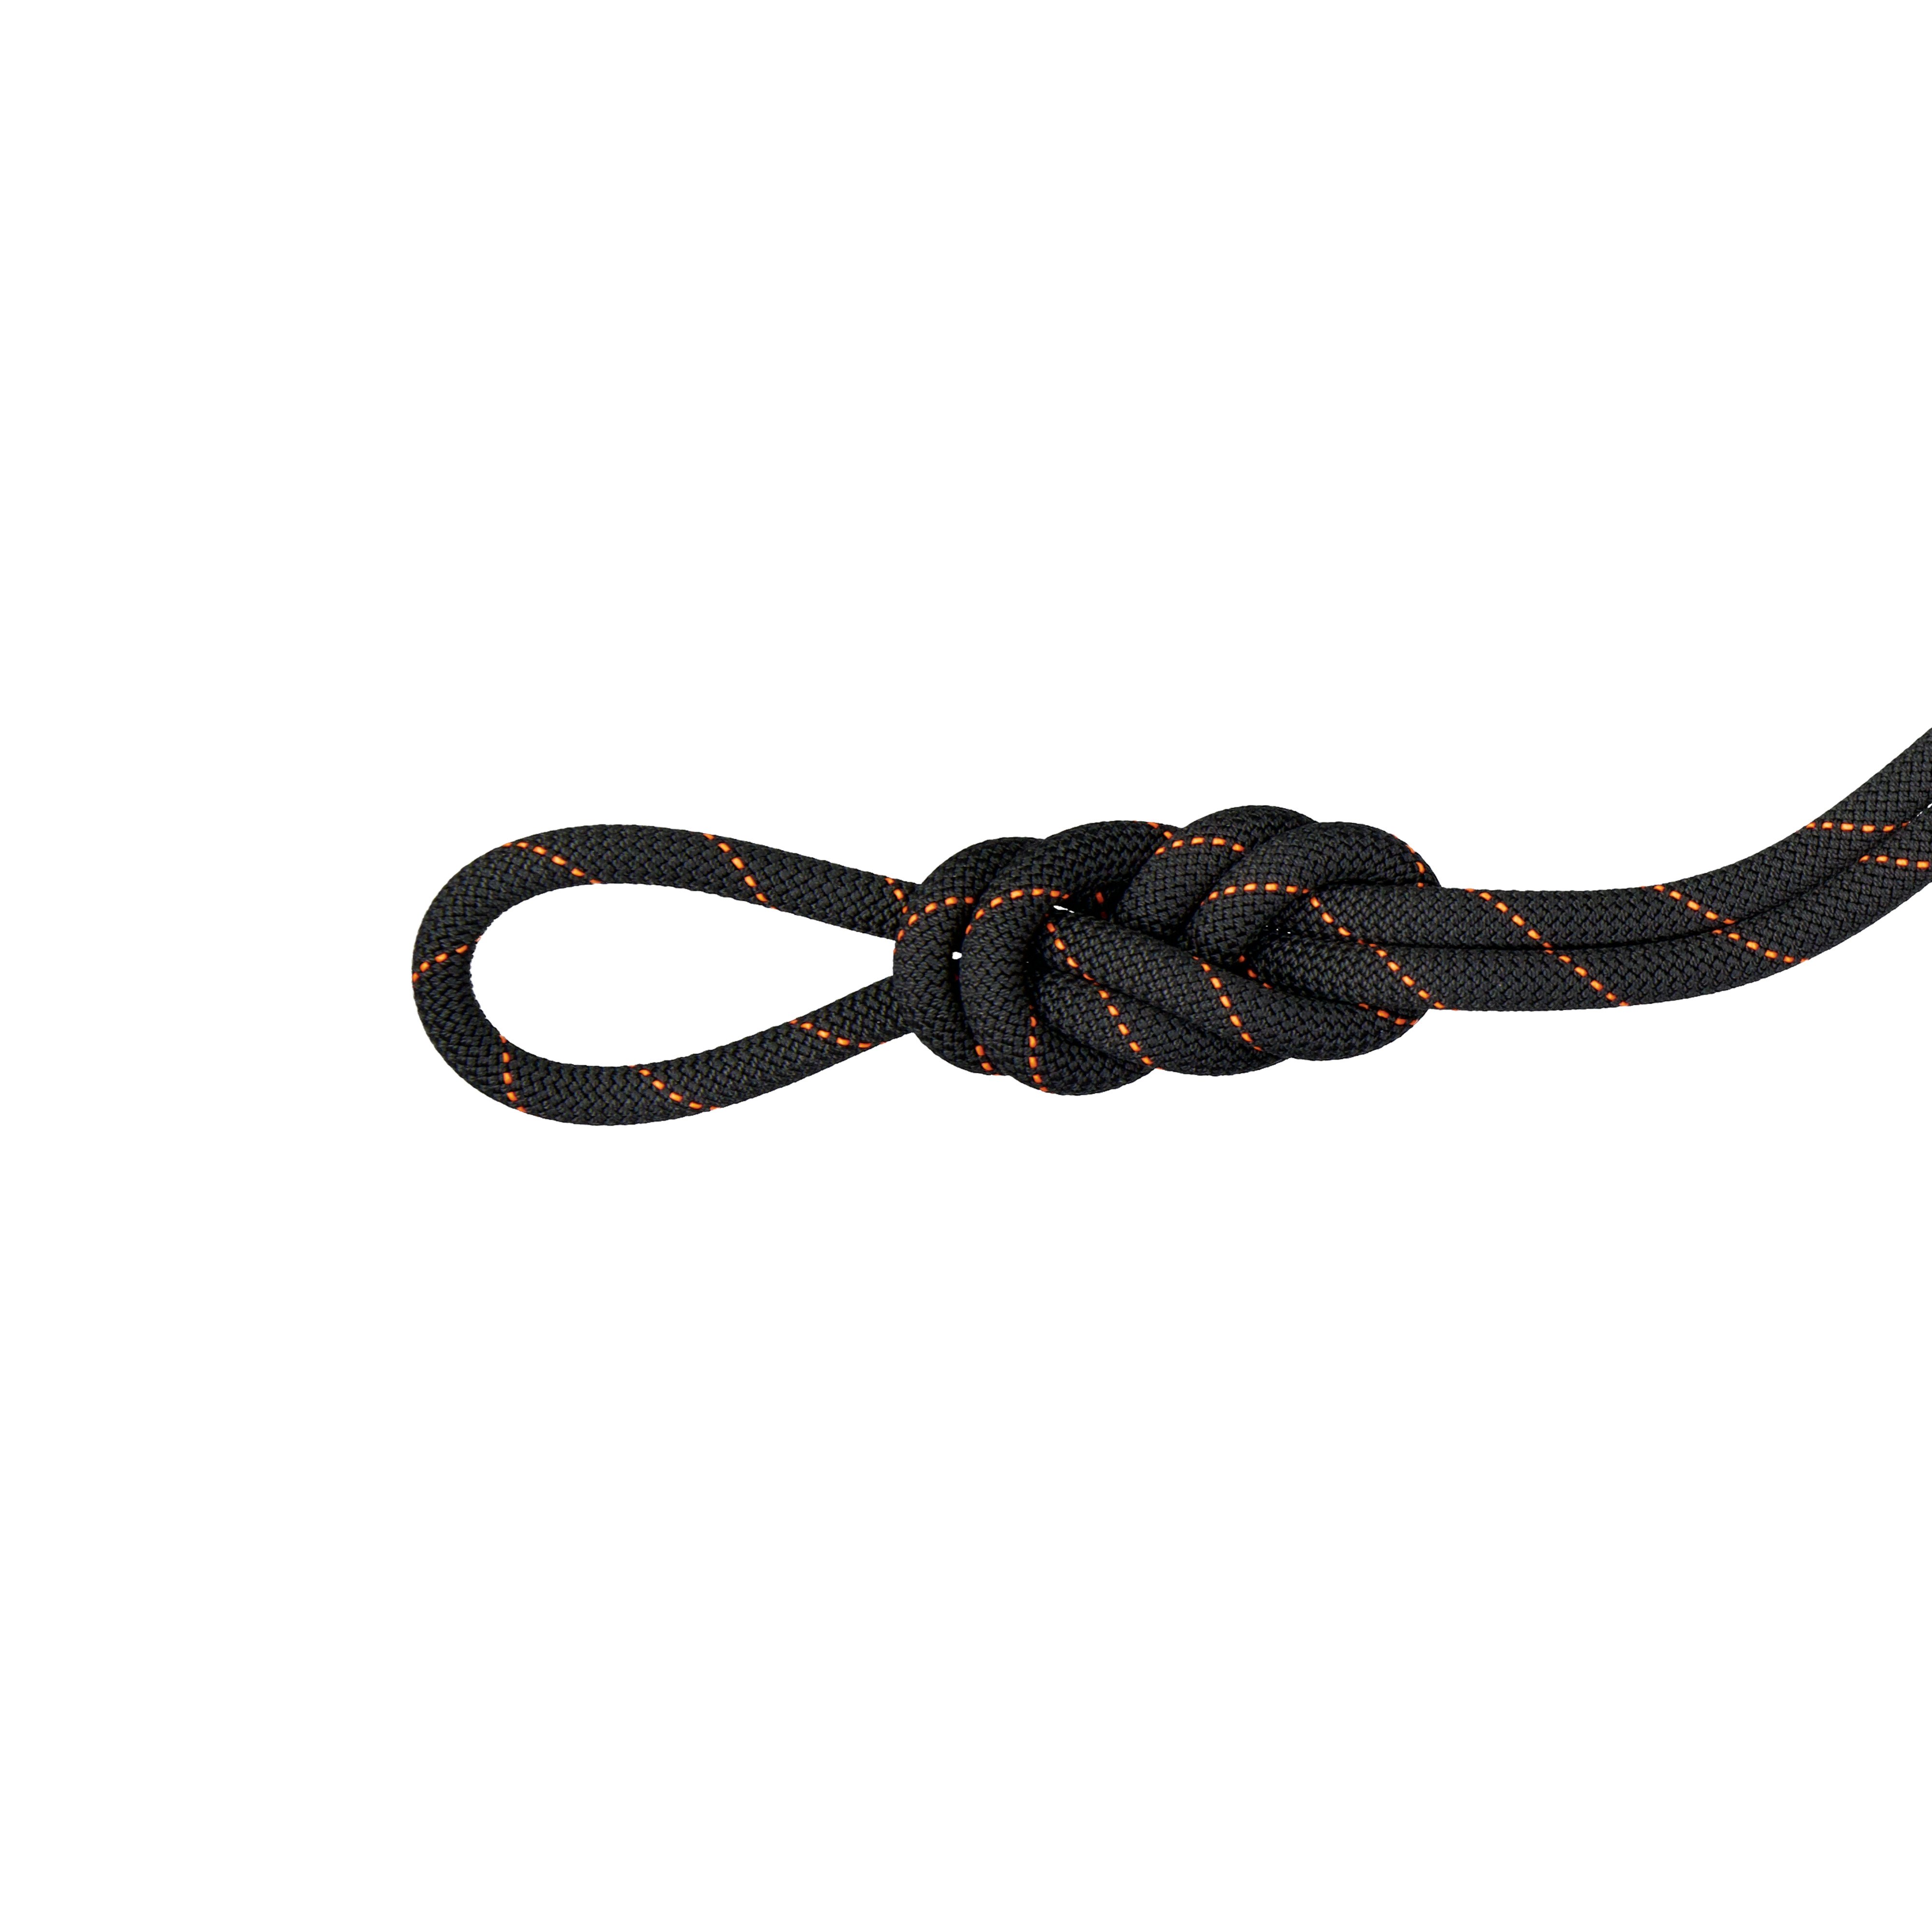 9.9 Gym Workhorse Dry Rope - Dry Standard, black, 30 m thumbnail